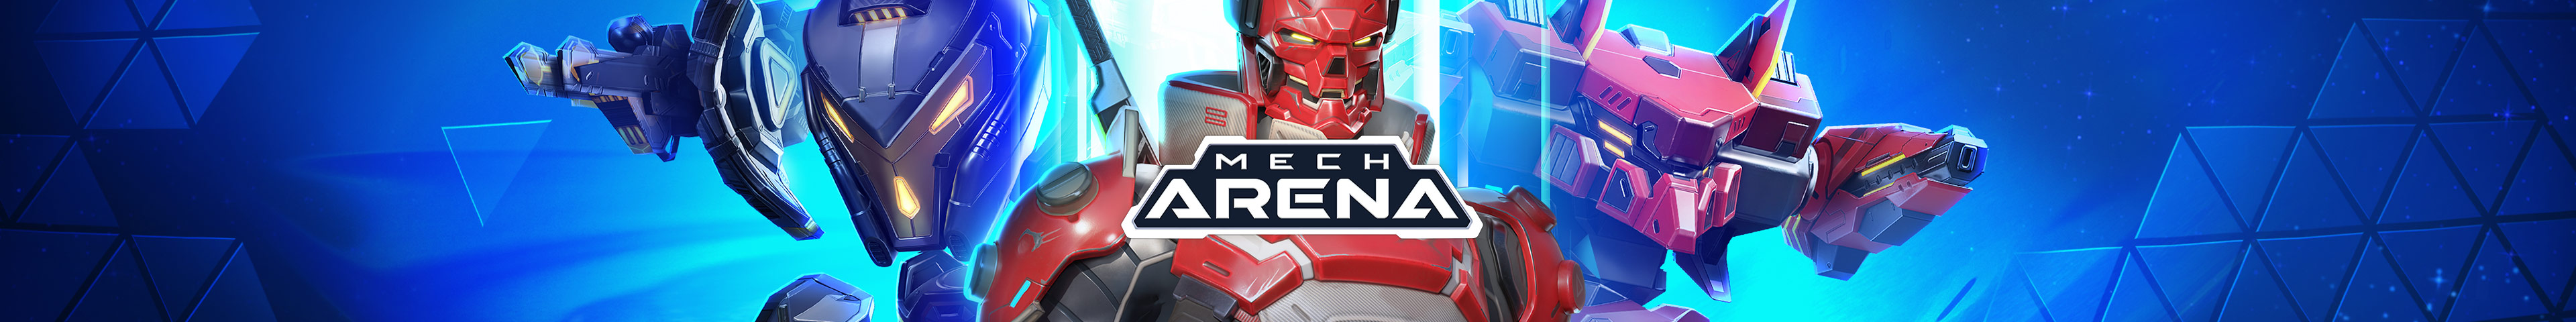 Mech Arena (メカアリーナ) - JP